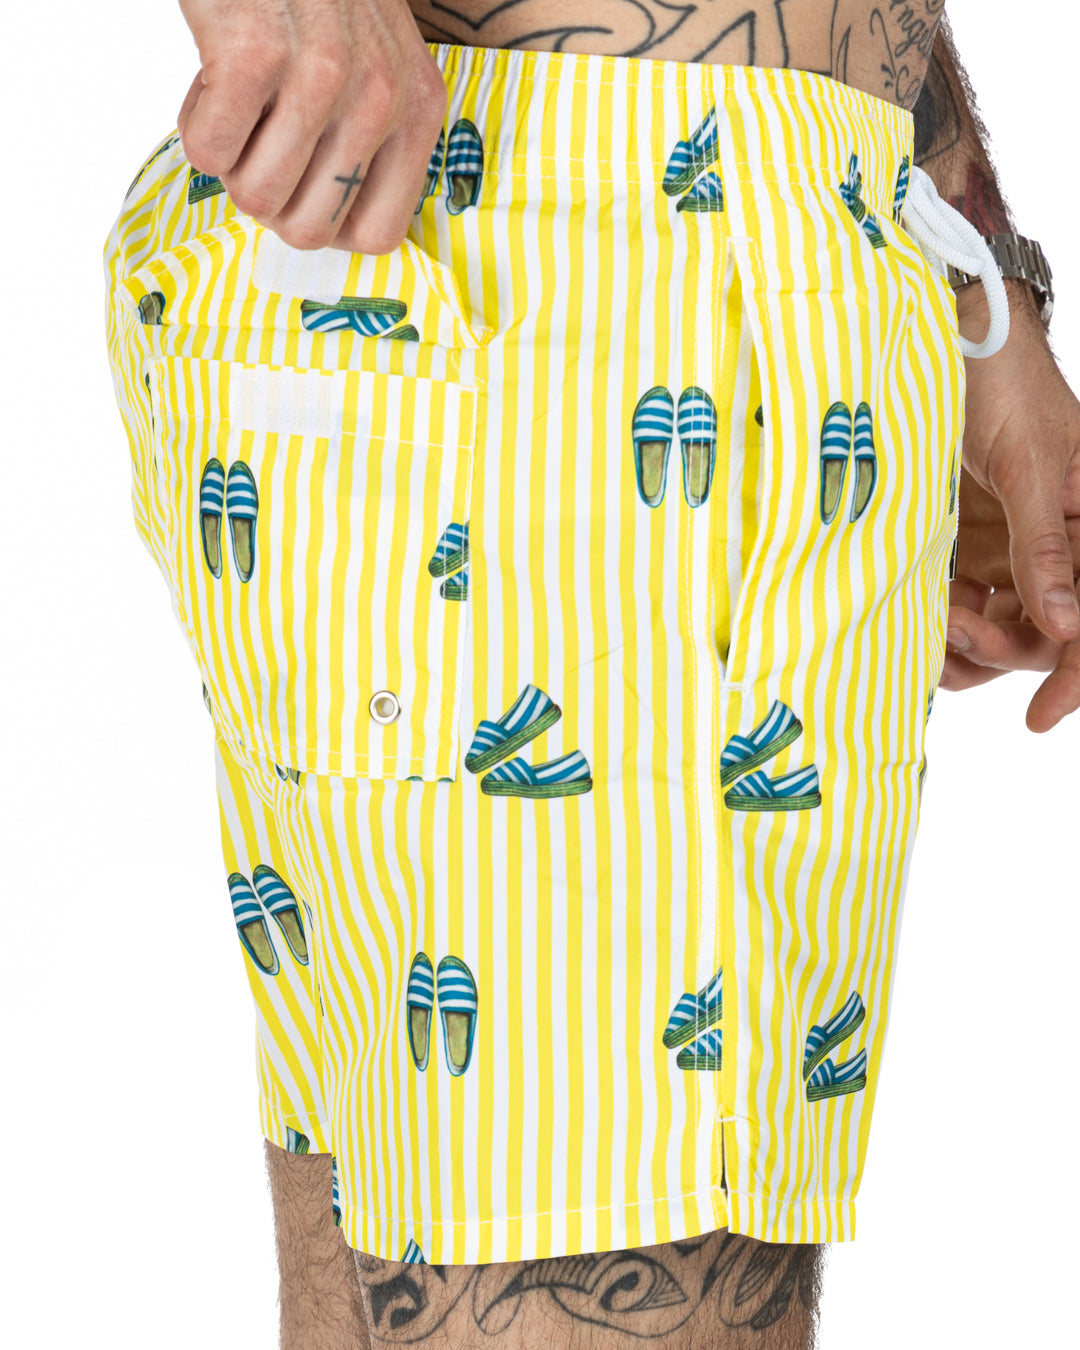 Swimsuit - Yellow striped espadrilles pattern